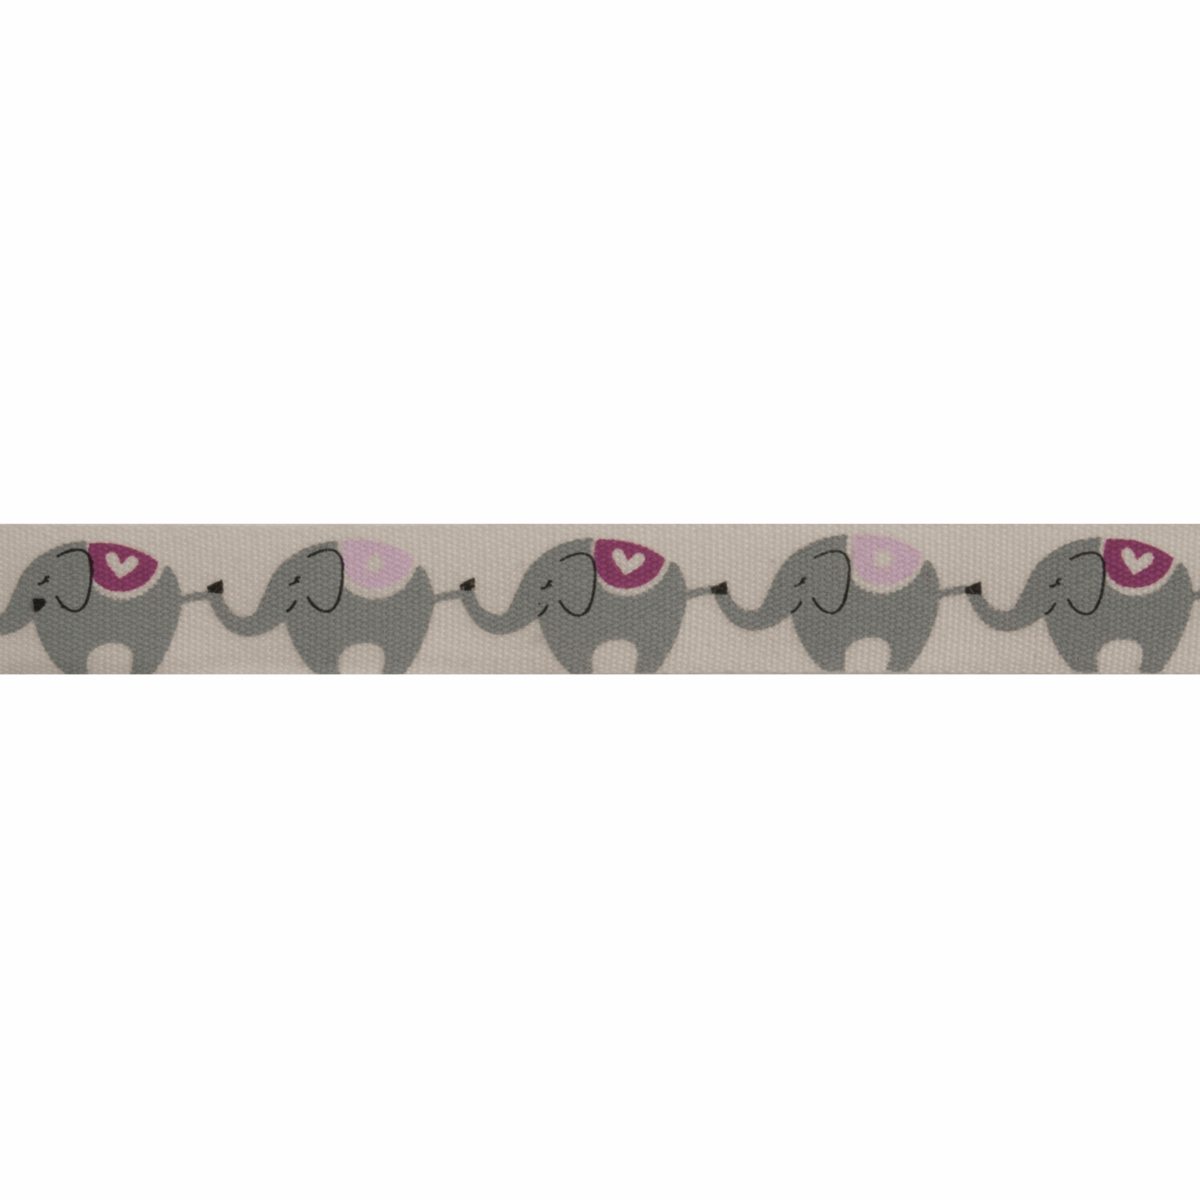 Bowtique Pink Elephants Grosgrain Ribbon - 5m x 15mm Roll